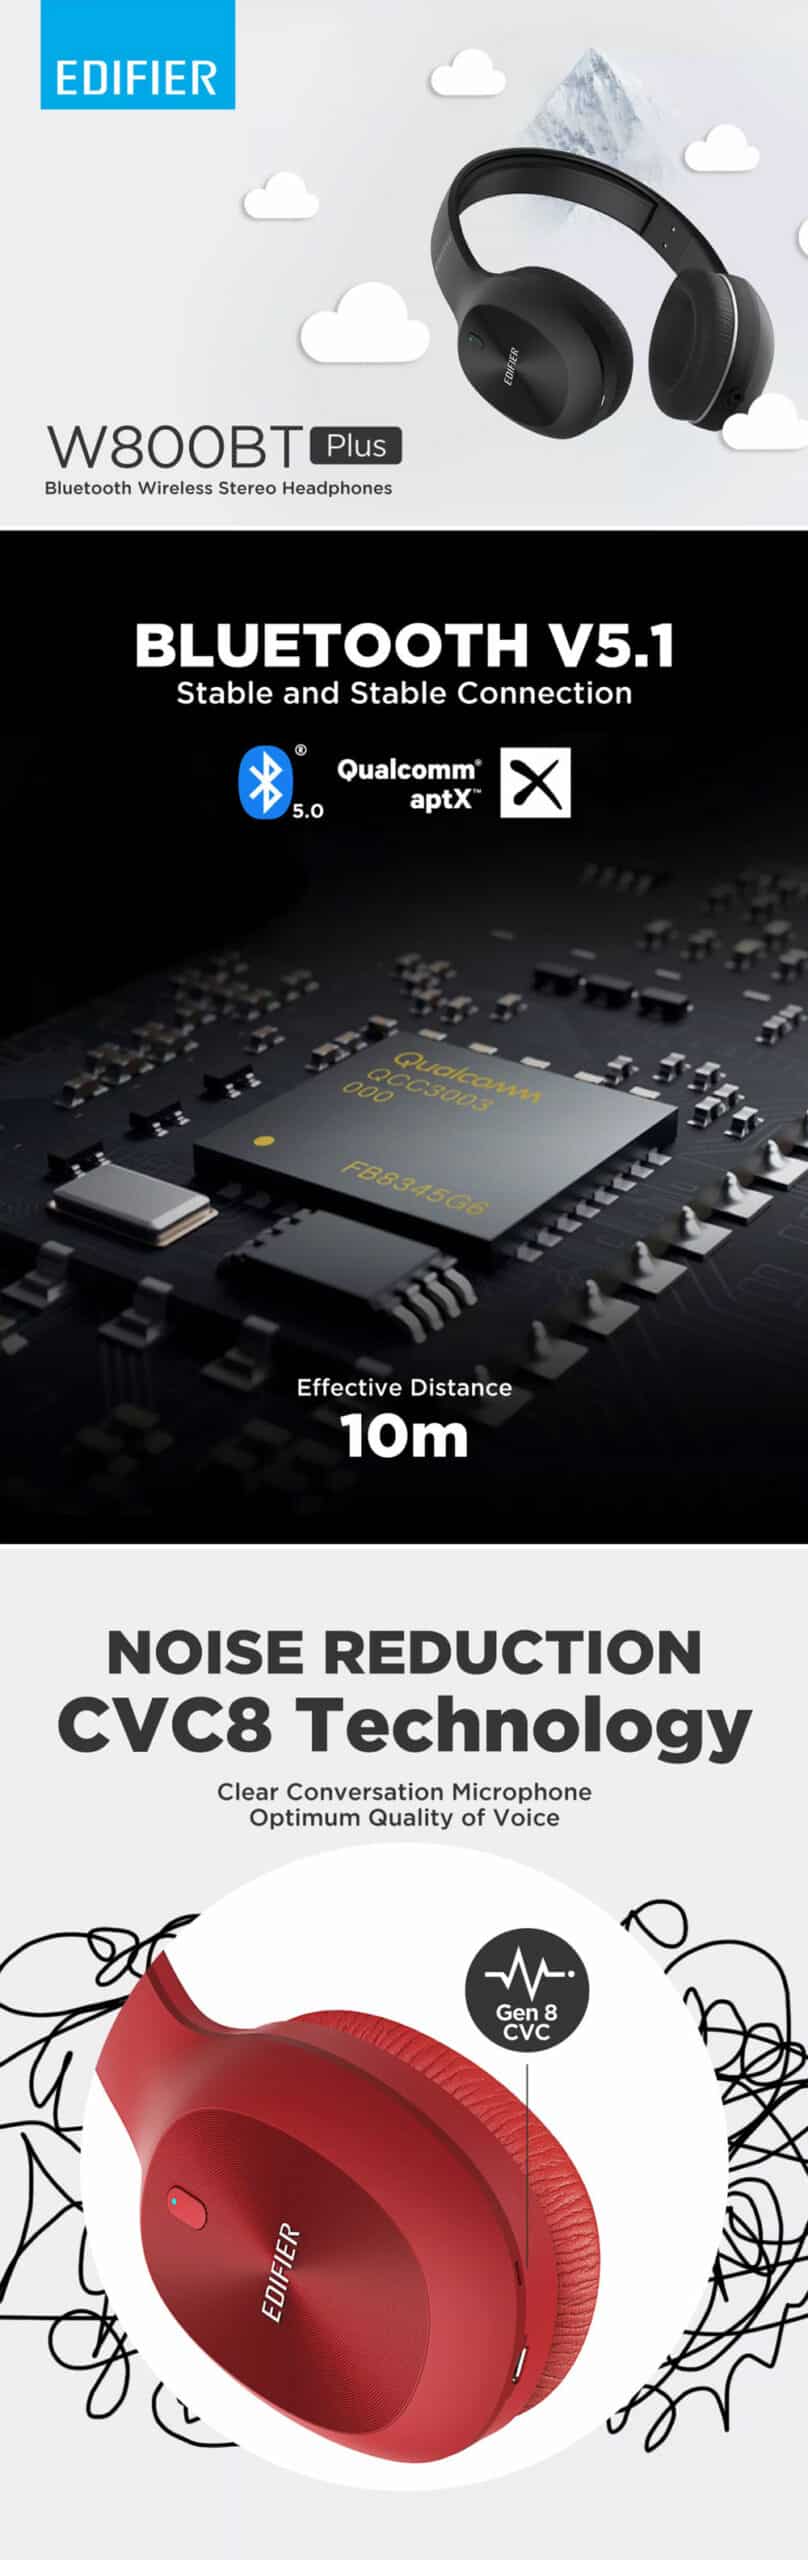 Edifier W800BT Plus Bluetooth Stereo Headphones 3 scaled